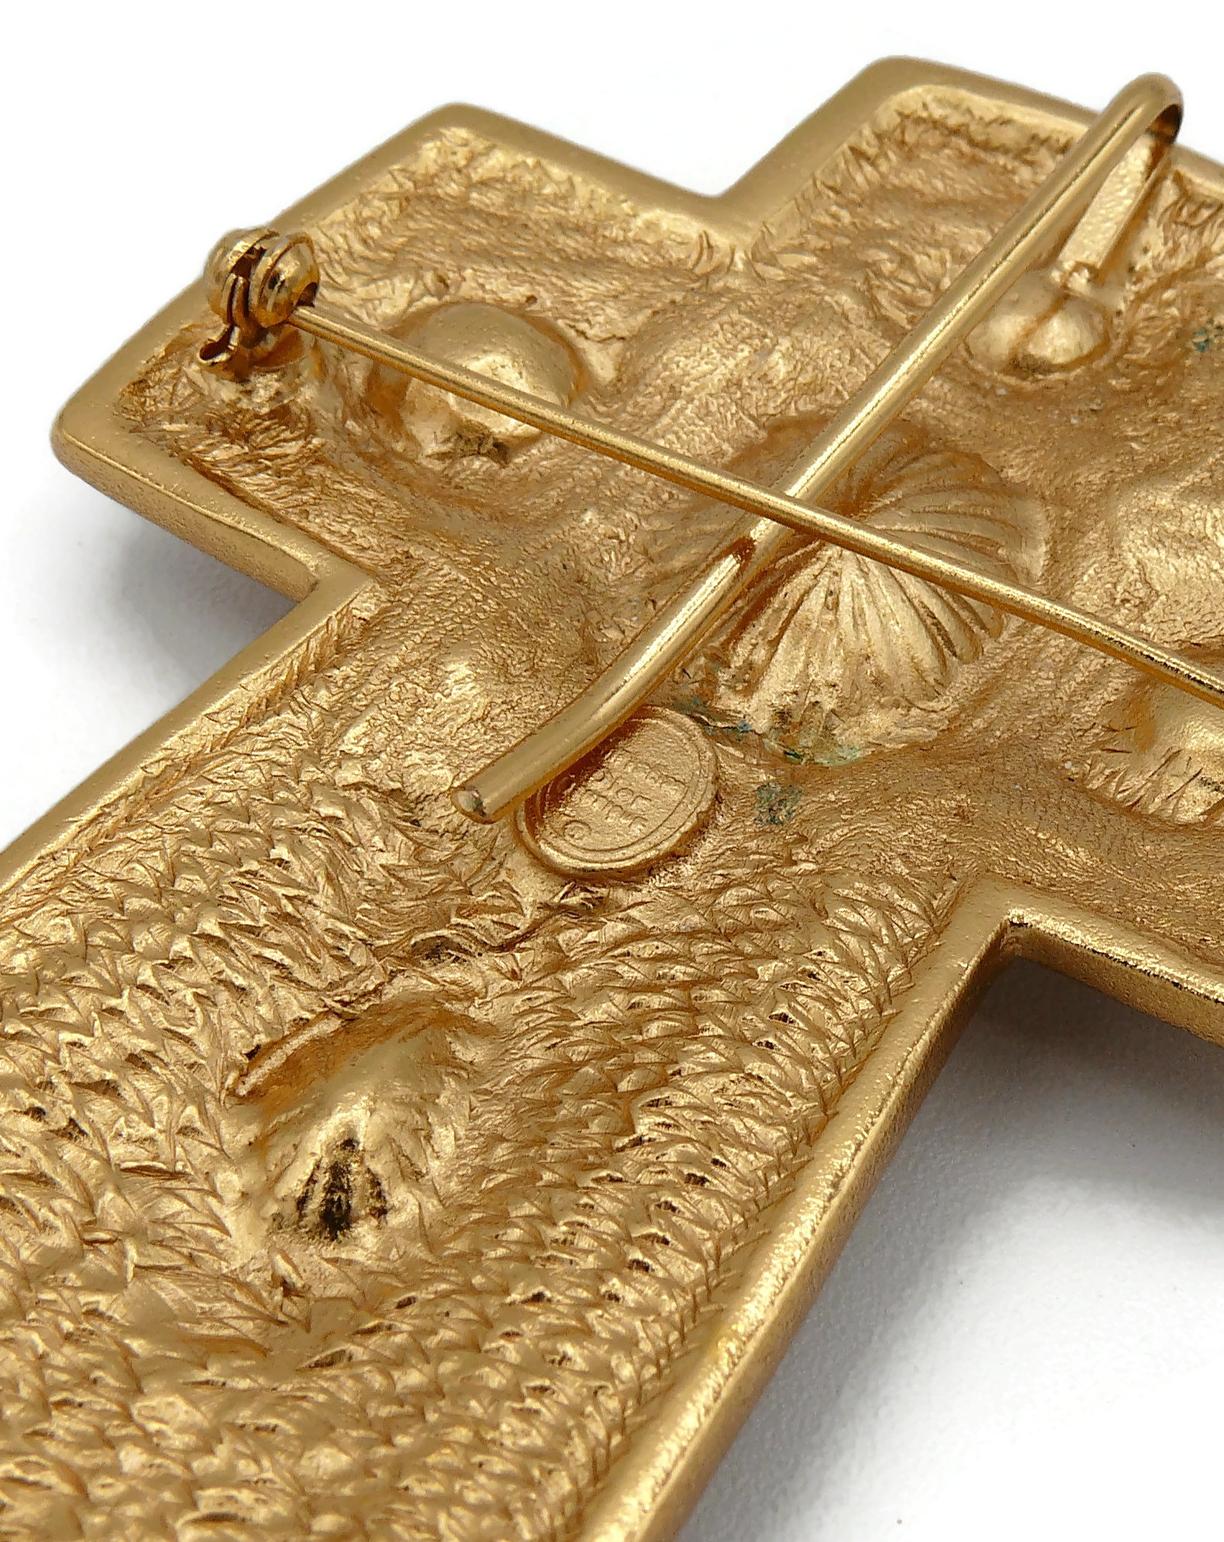 Christian Dior Boutique Vintage Massive Jewelled Cross Brooch Pendant For Sale 5